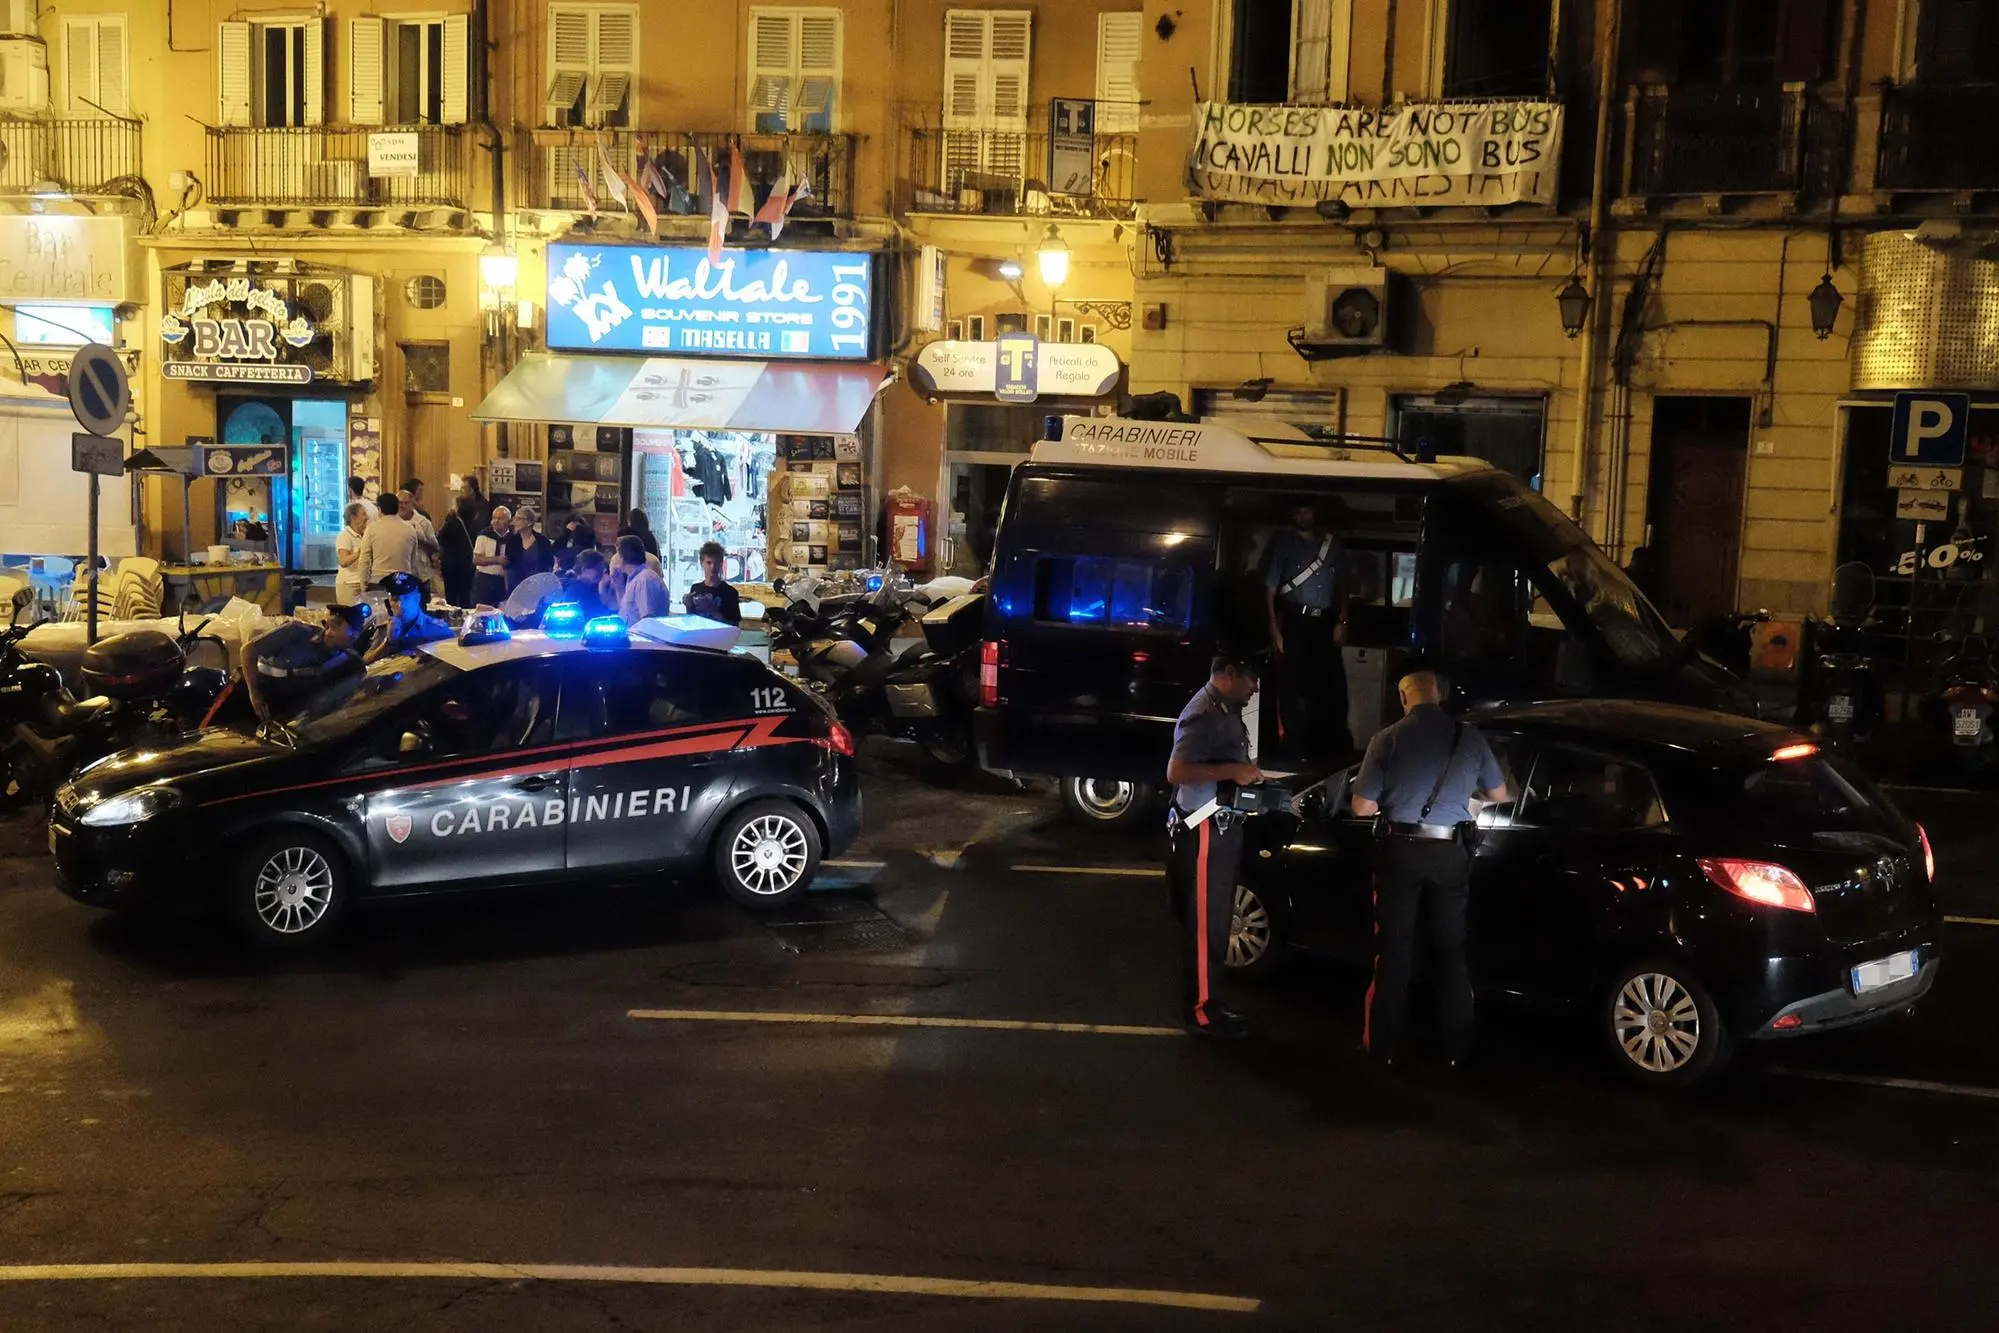 Carabinieri in Piazza Yenne (photo L'Unione Sarda)